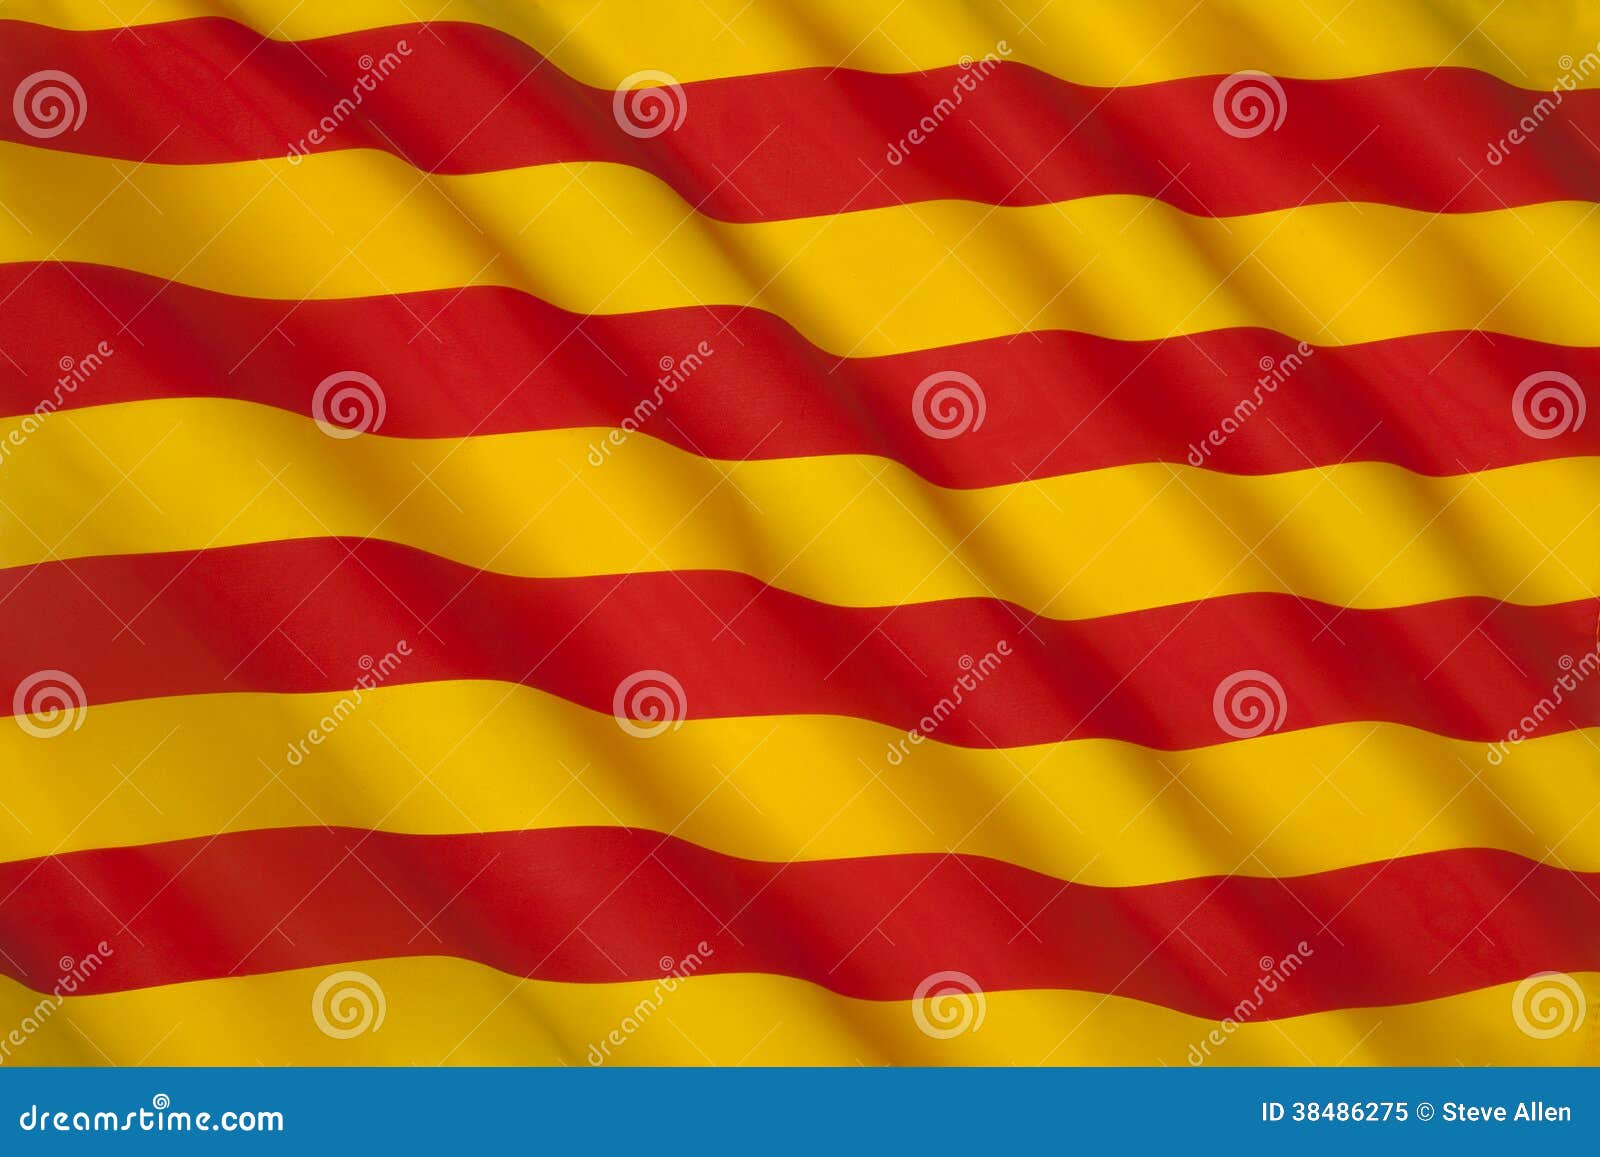 flag of catalonia - spain - europe